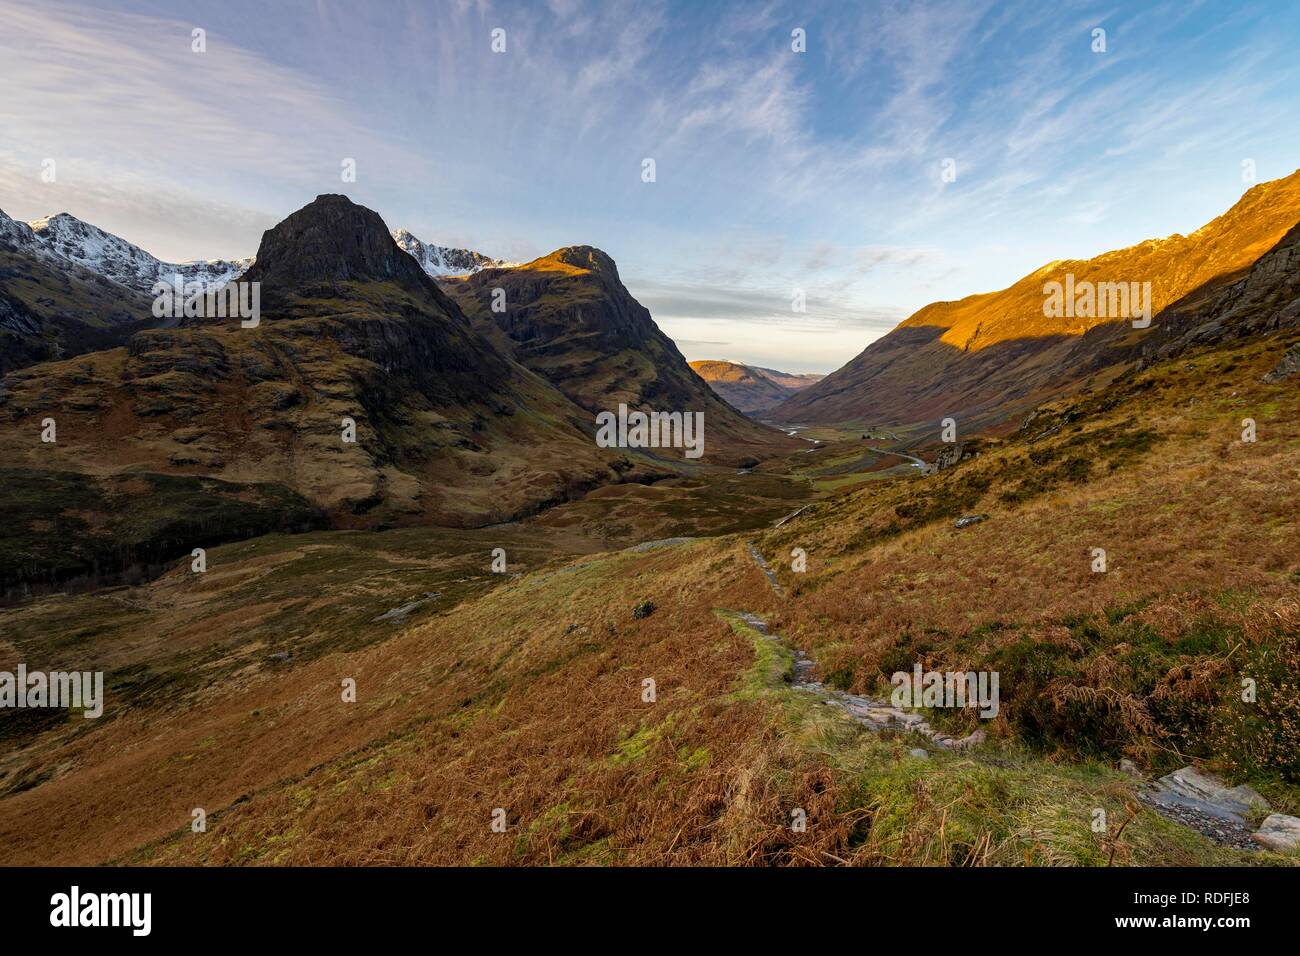 Hiking trail in mountain scenery with peaks of Stob Coire nan Lochan, Glen Coe, west Highlands, Scotland, United Kingdom Stock Photo